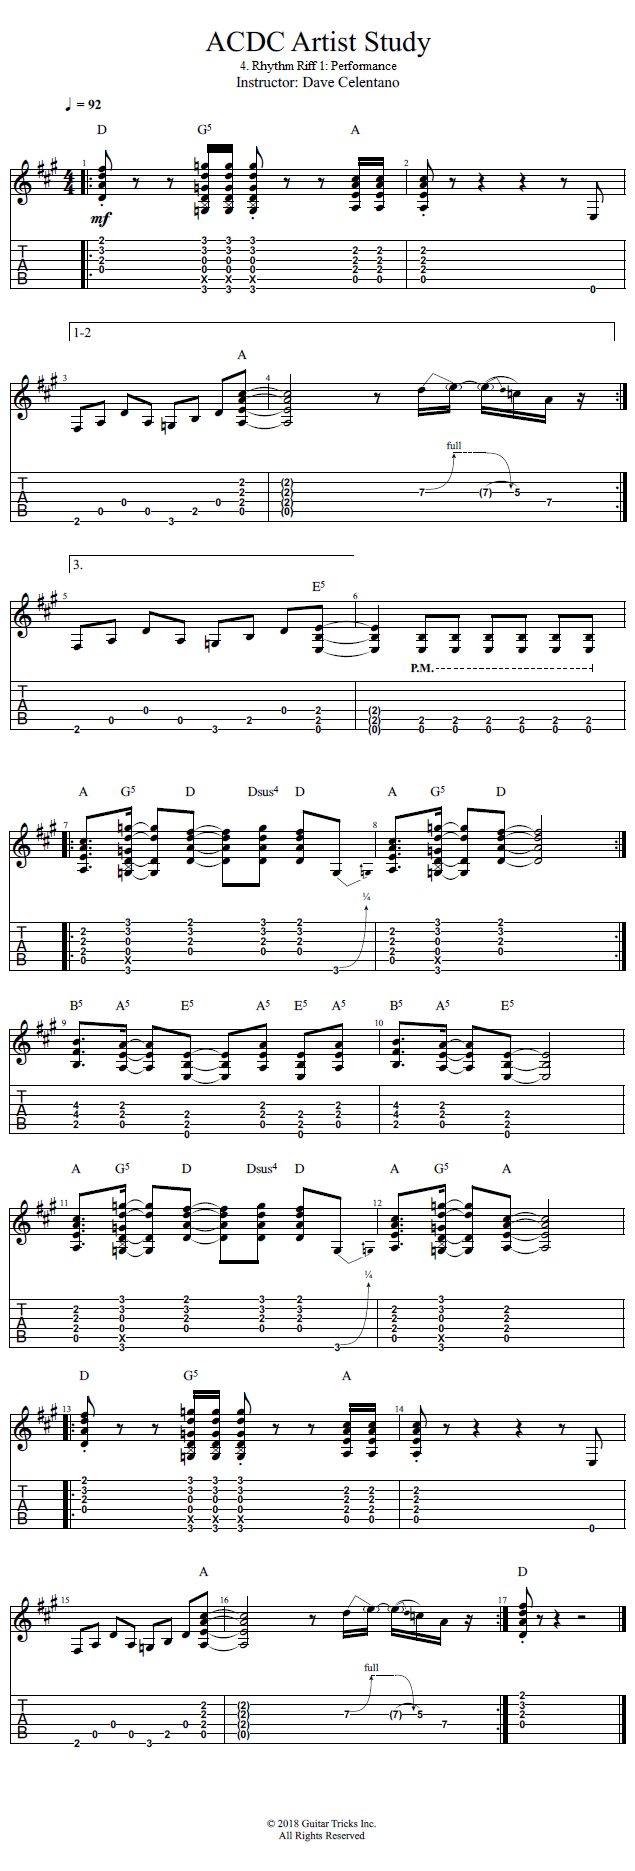 Rhythm Riff 1: Performance song notation